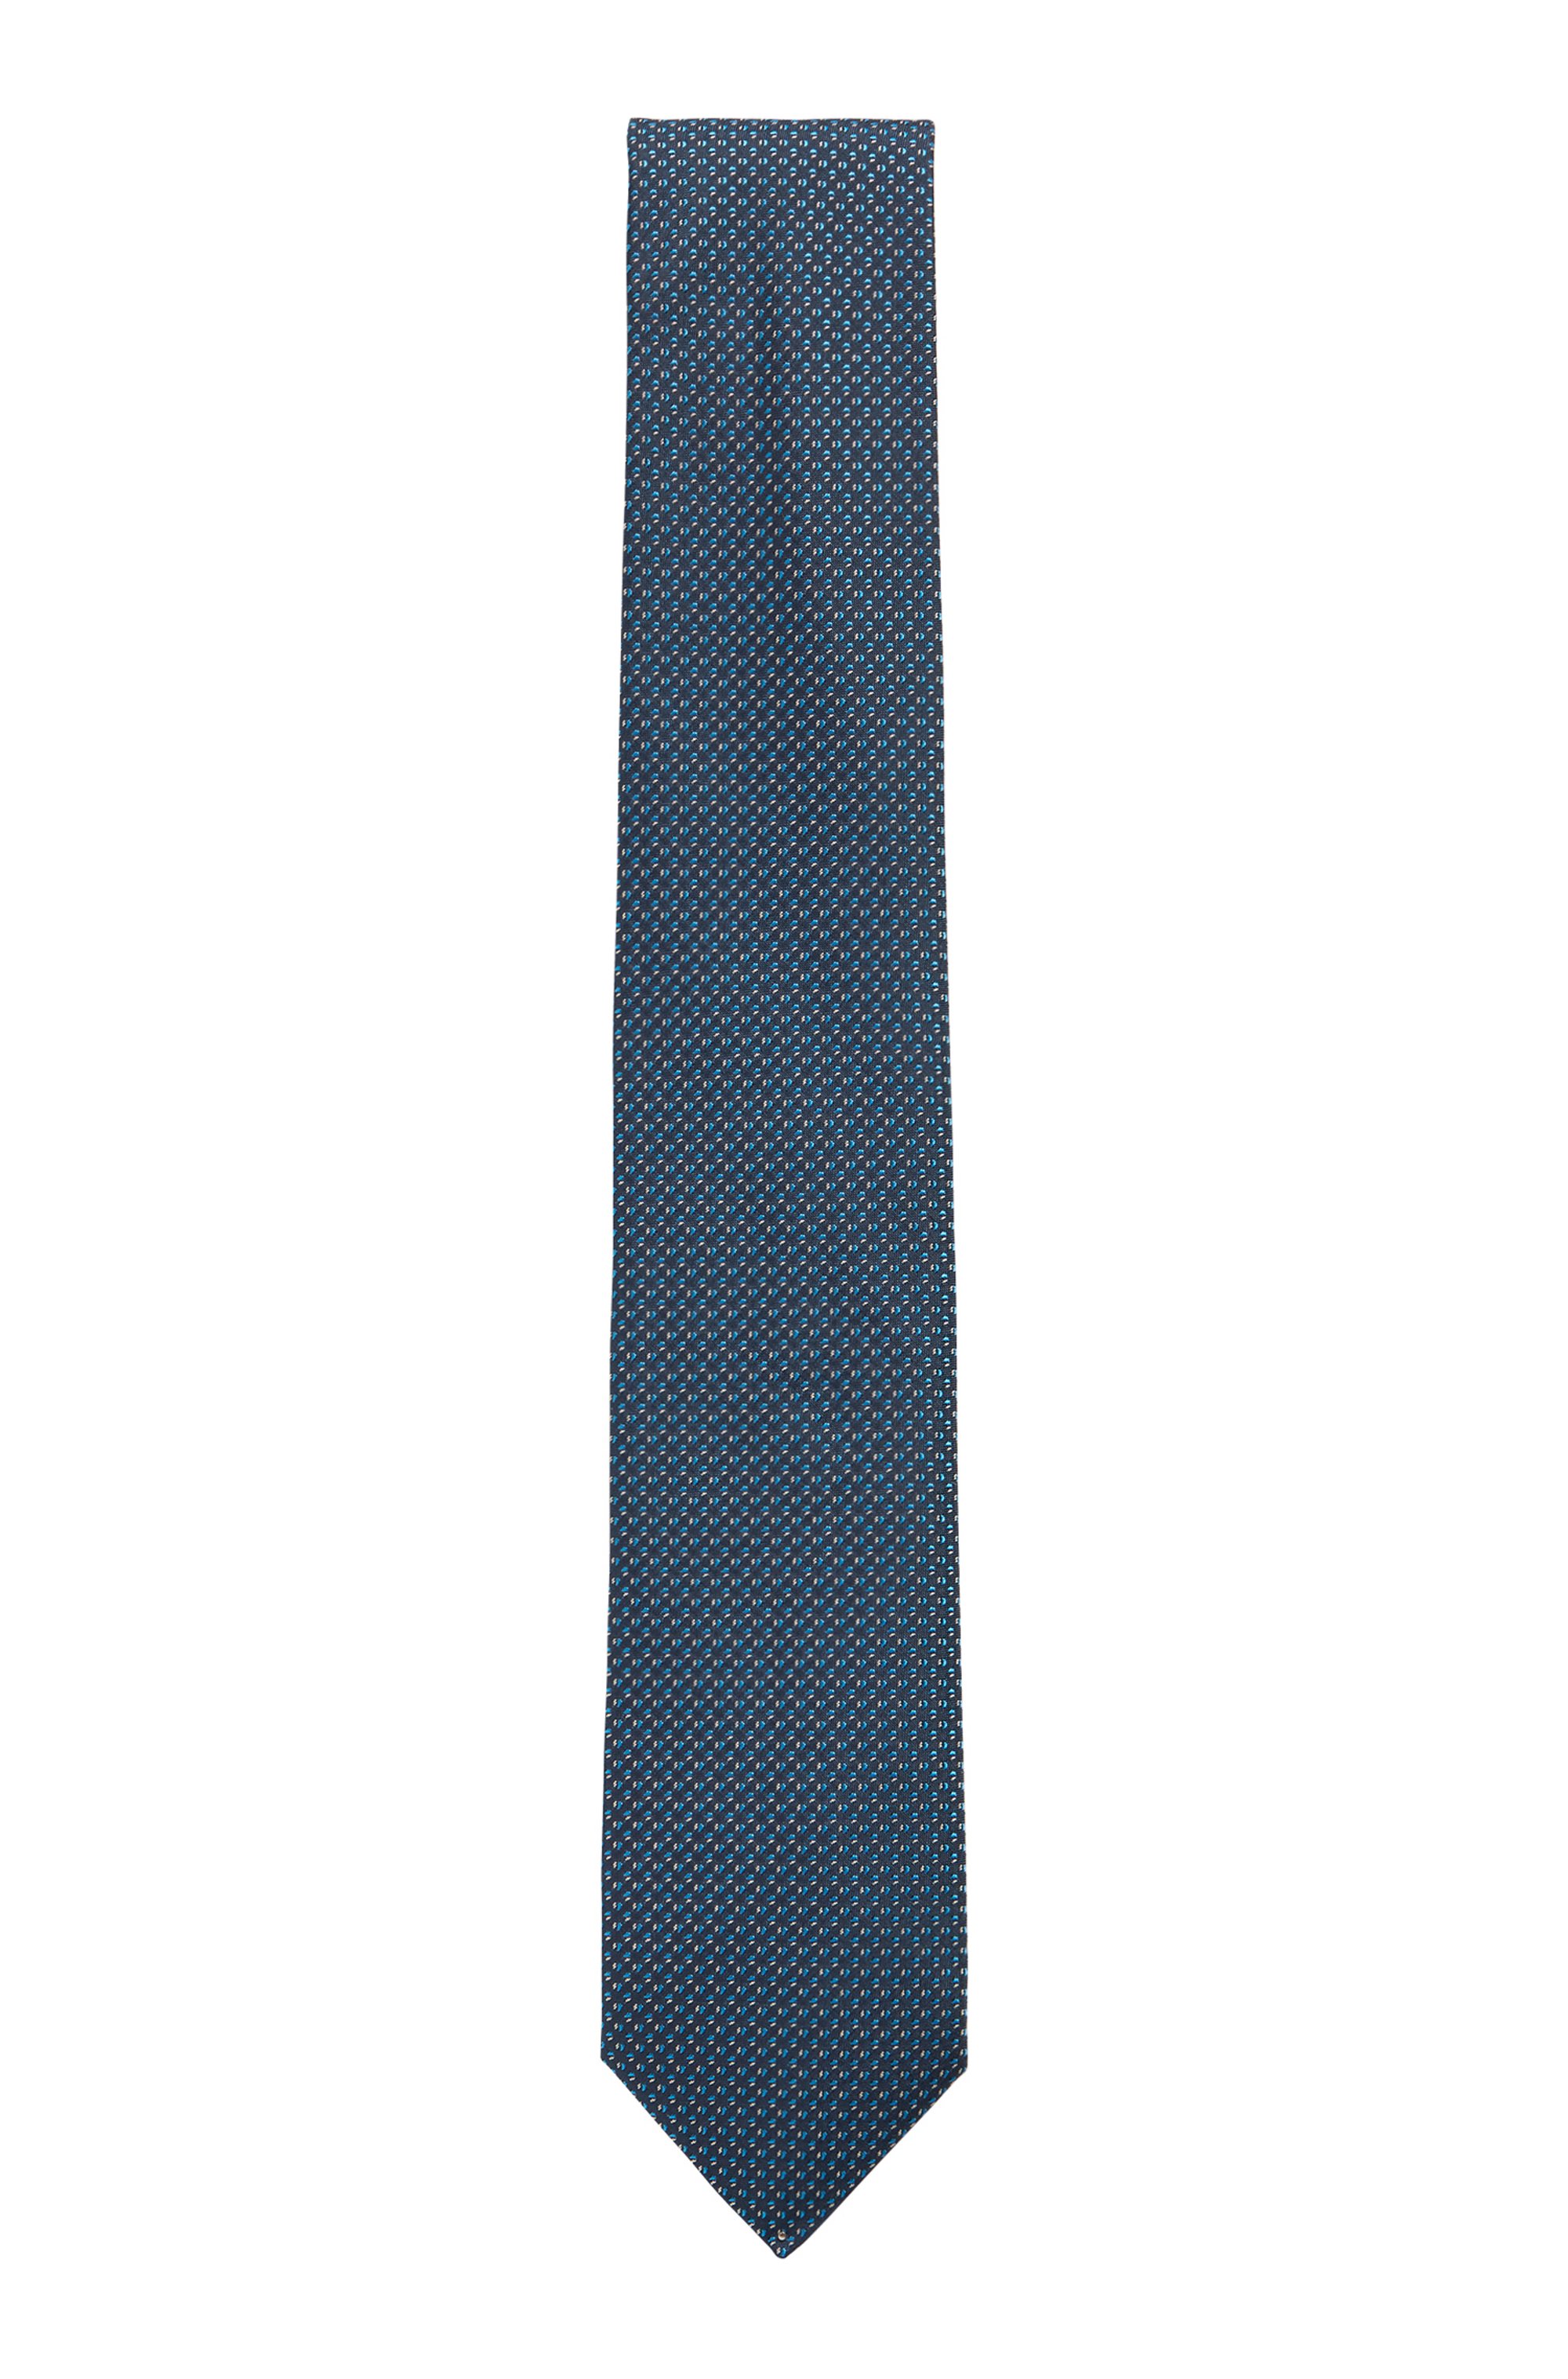 Jacquard-patterned tie in water-repellent silk, Dark Blue